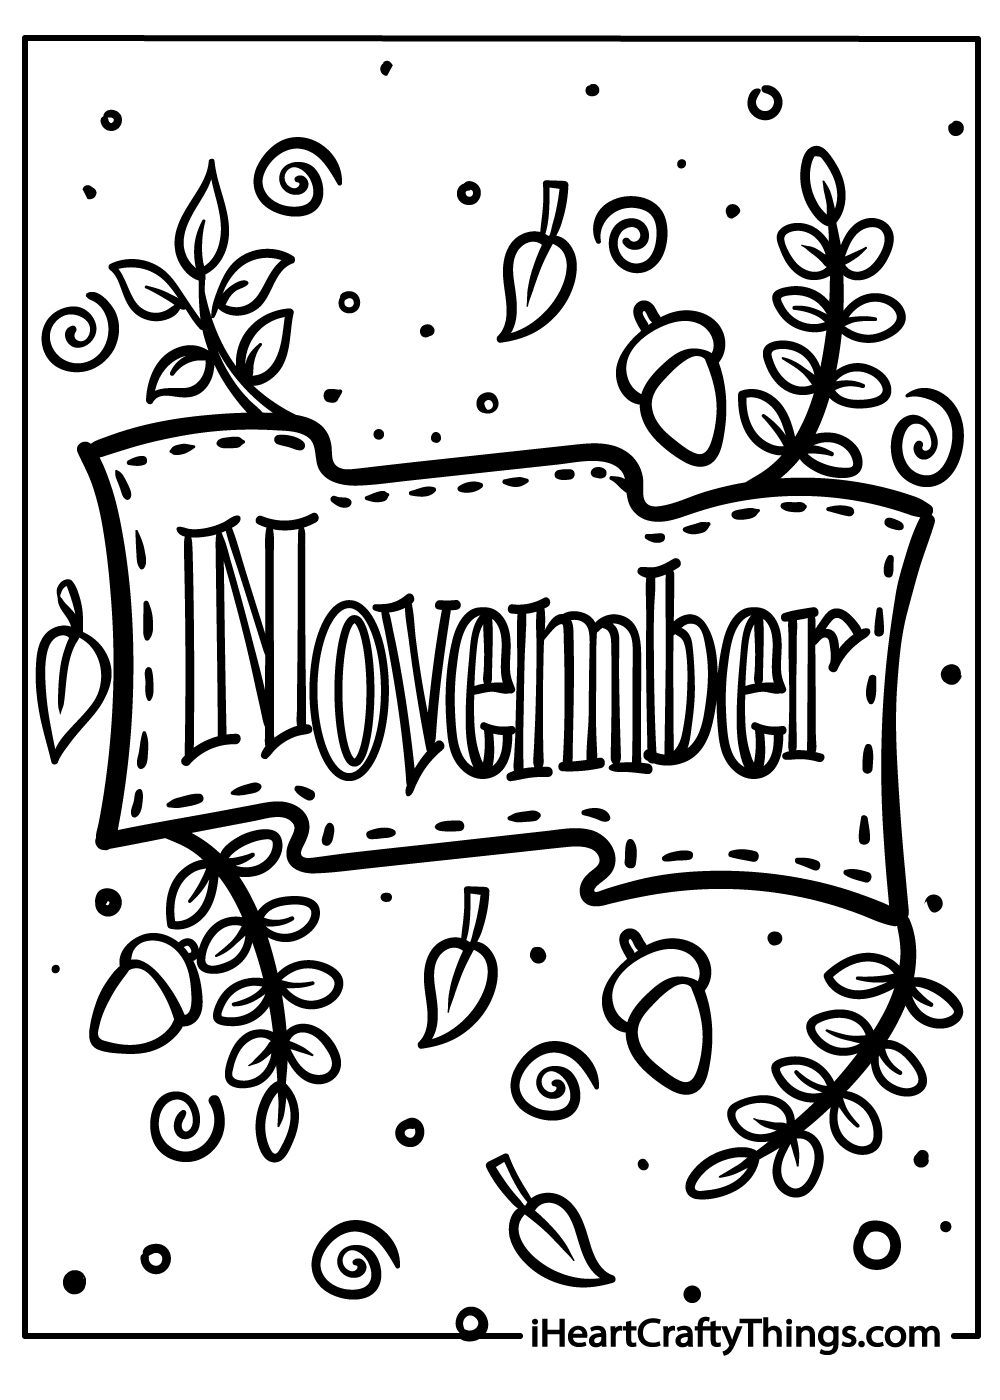 November coloring sheet free download